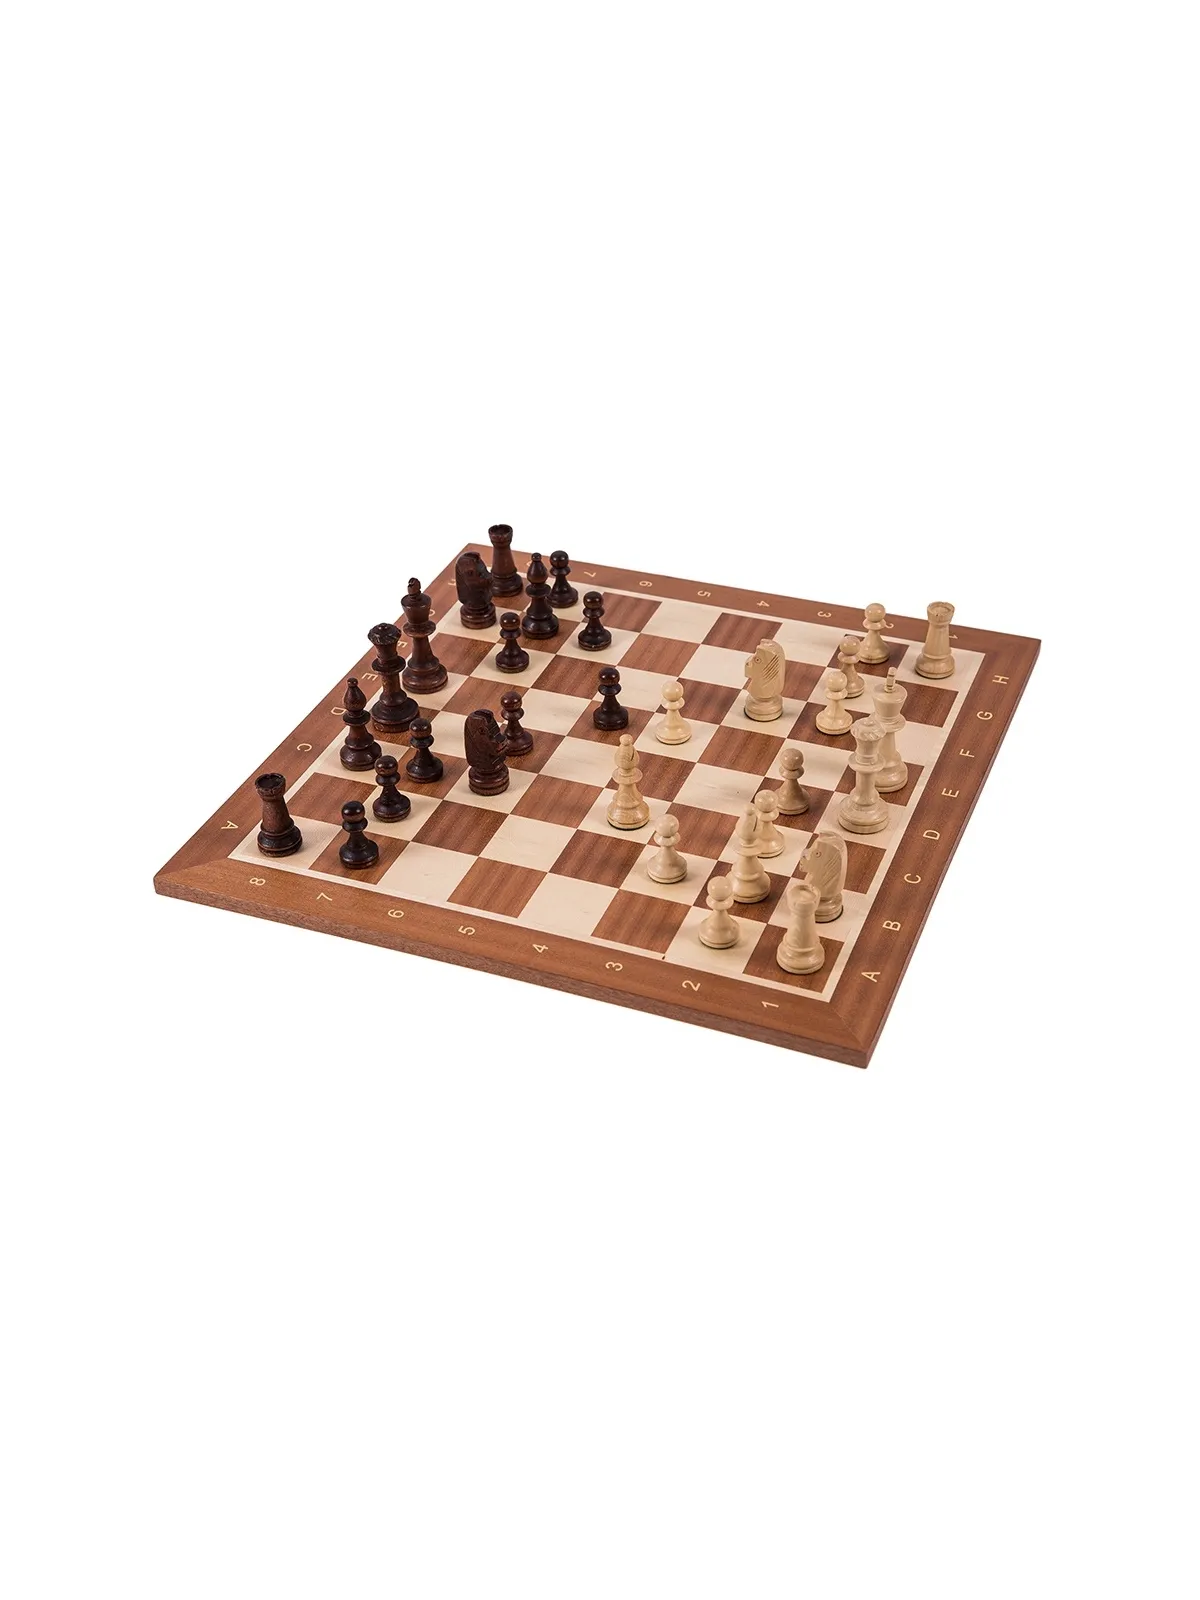 Profi Chess Set No 5 - Europe